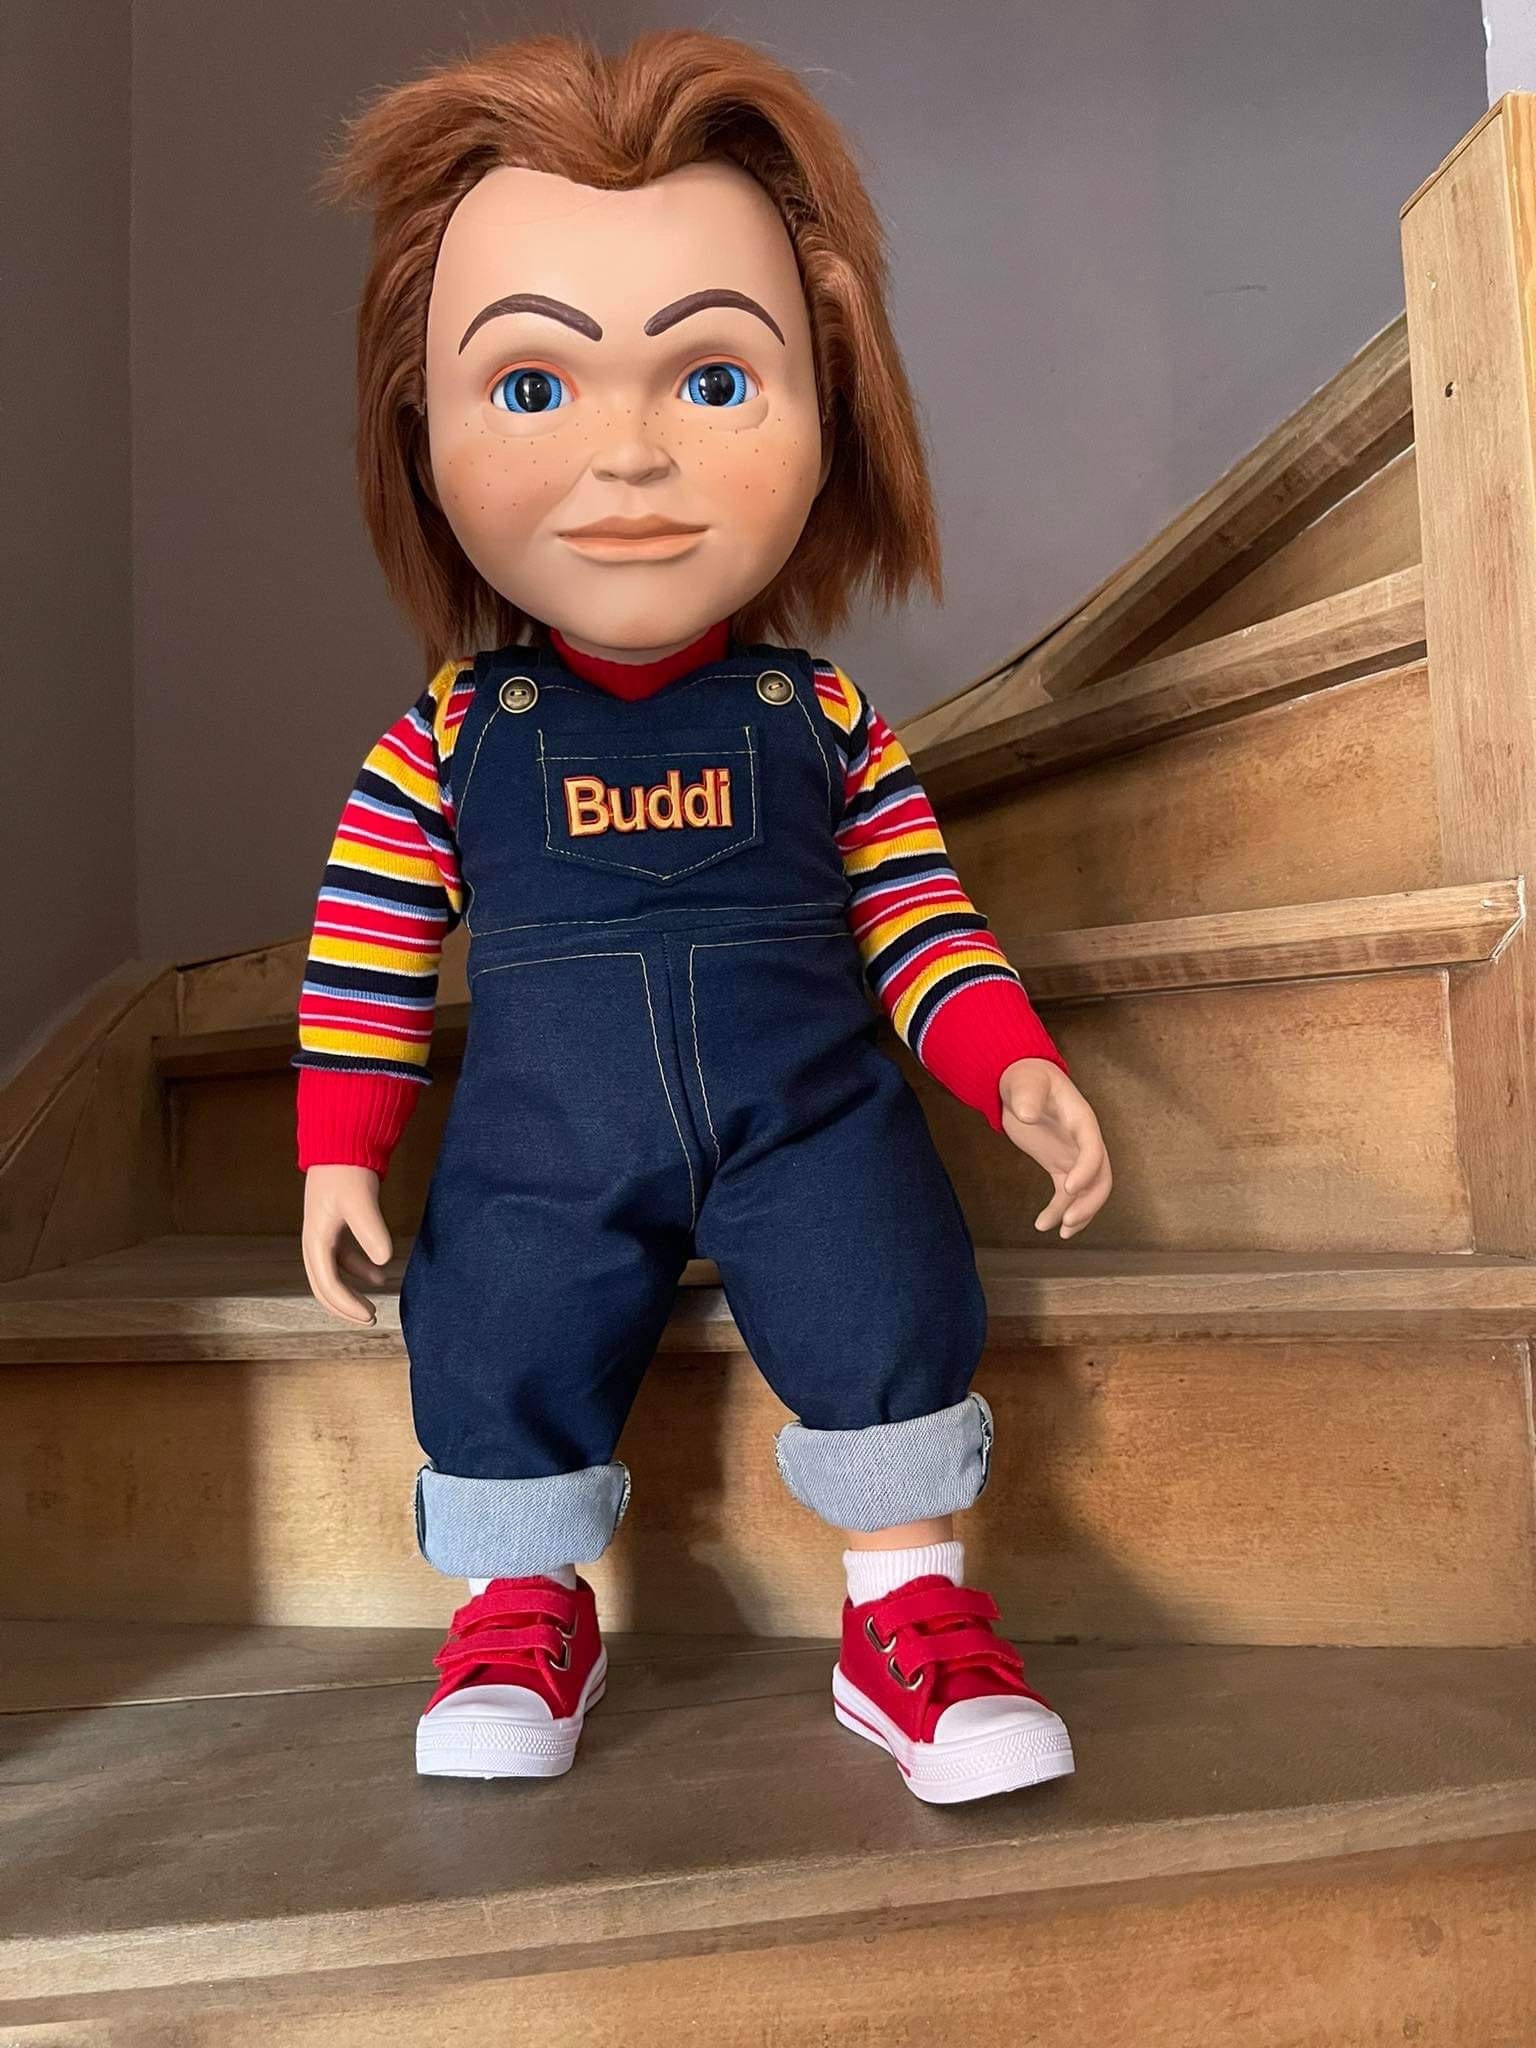 Buddi V4 Chucky Rag Doll Real Size life Size